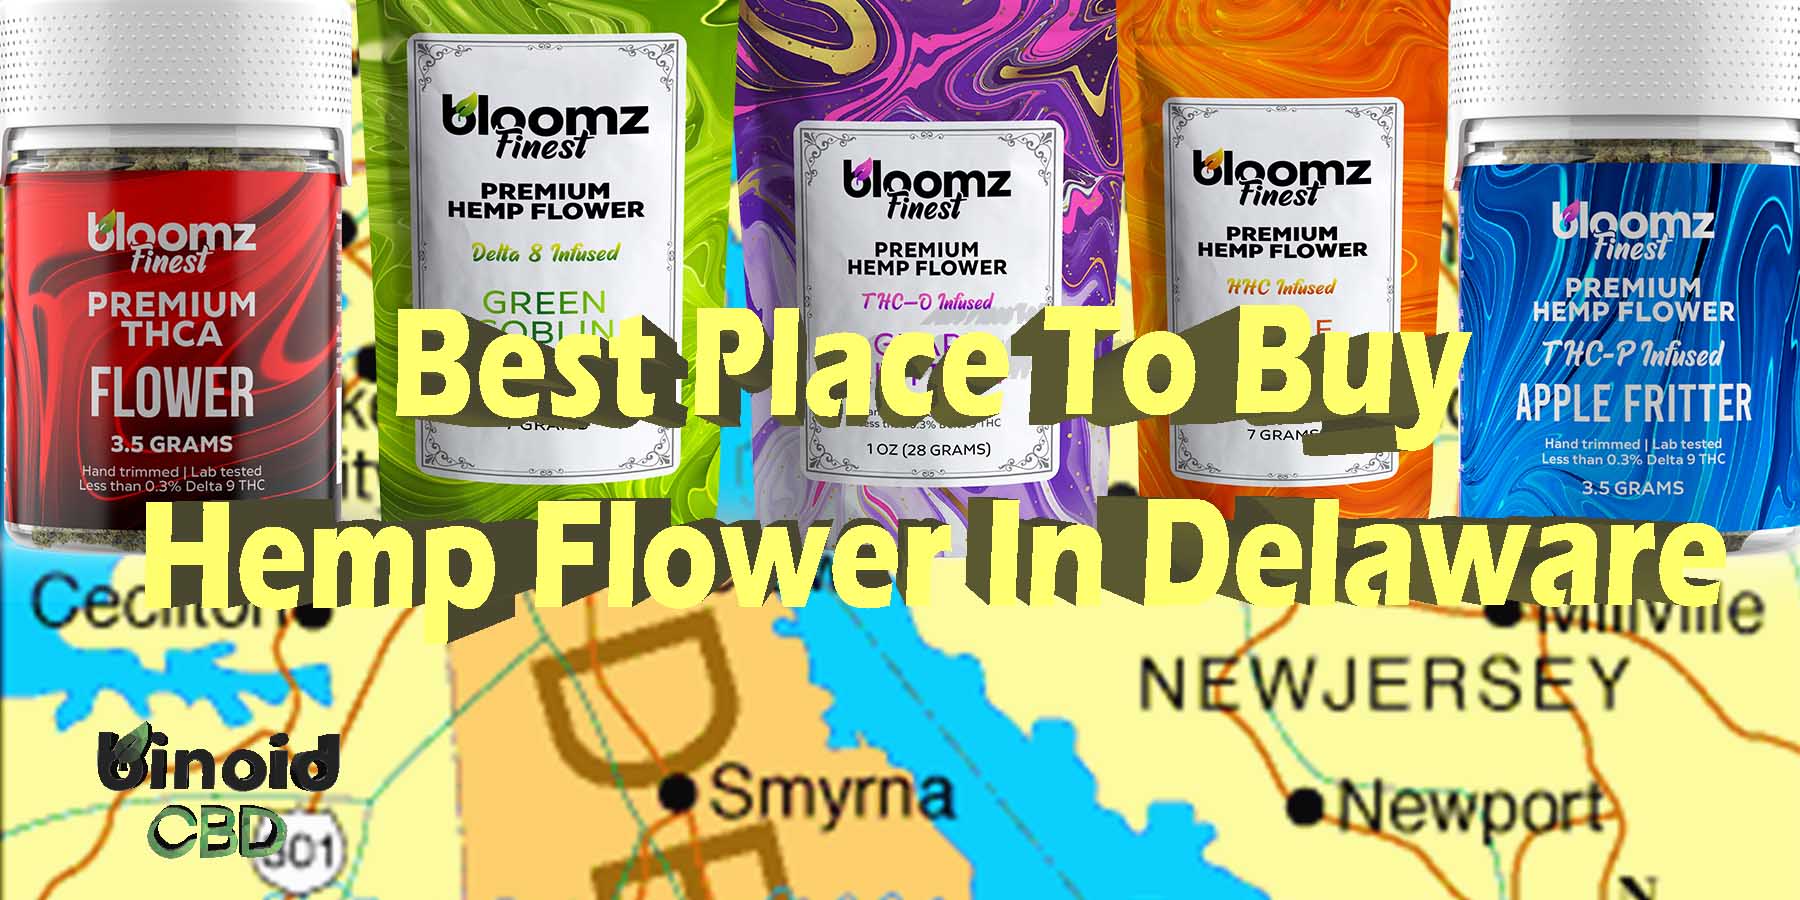 Buy Hemp Flower Delaware Joints PreRolls Get Online Near Me For Sale Best Brand Strongest Real Legal Store Shop Reddit